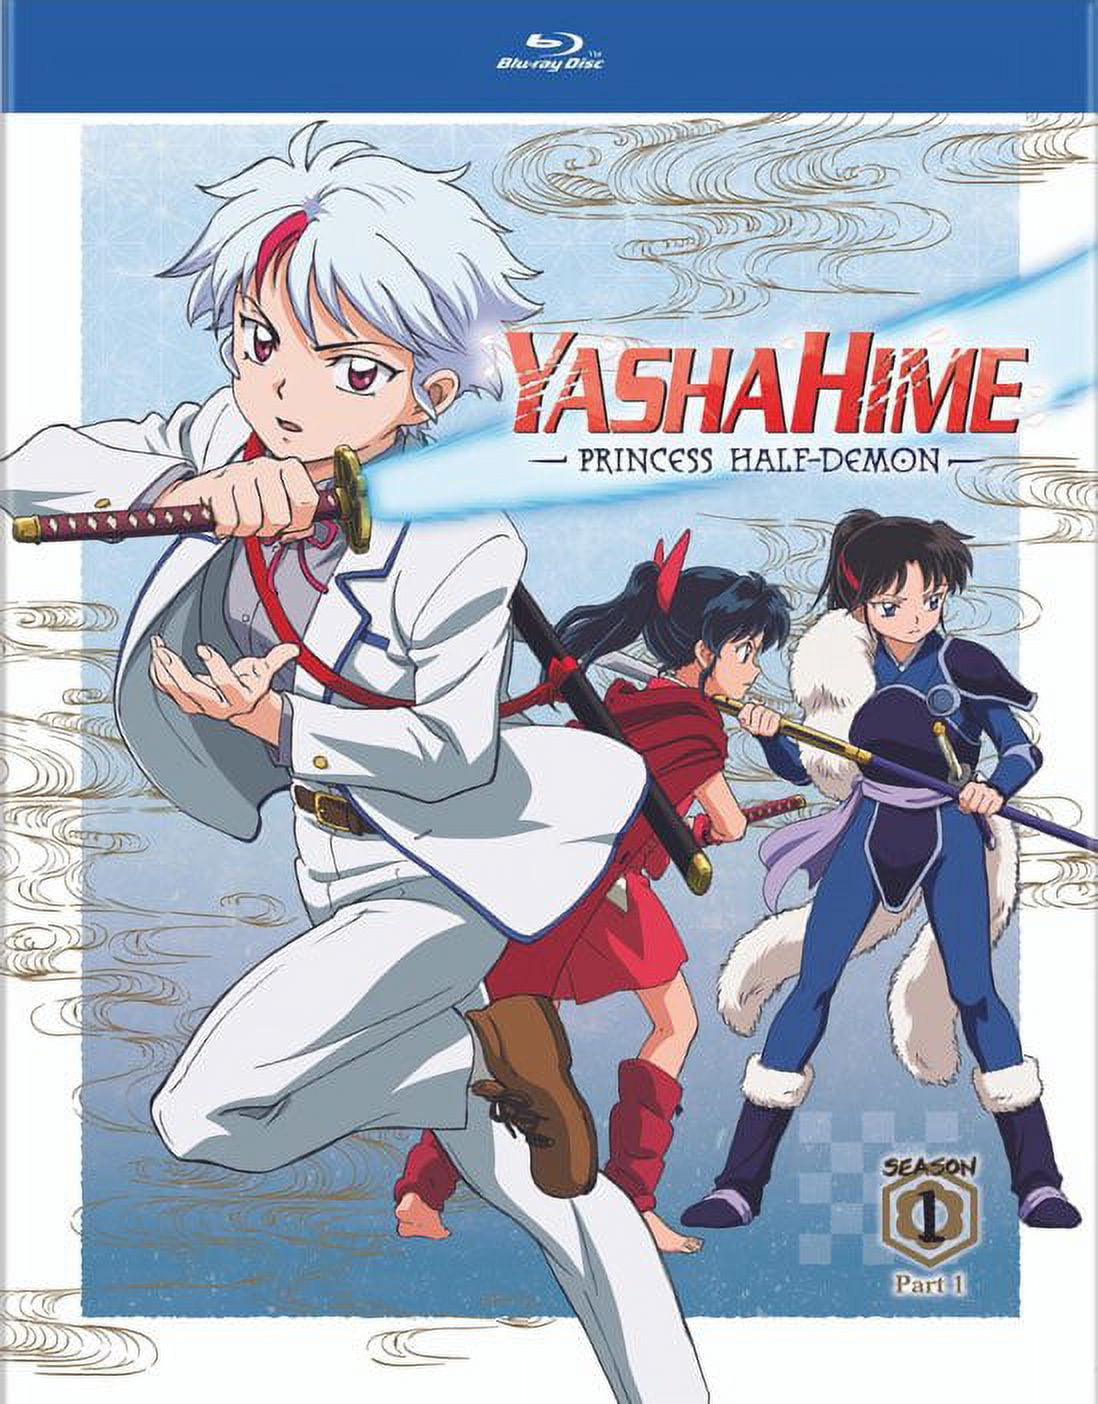 Yashahime: Princess Half-Demon - Season 1, Part 2 Blu-ray (Hanyō